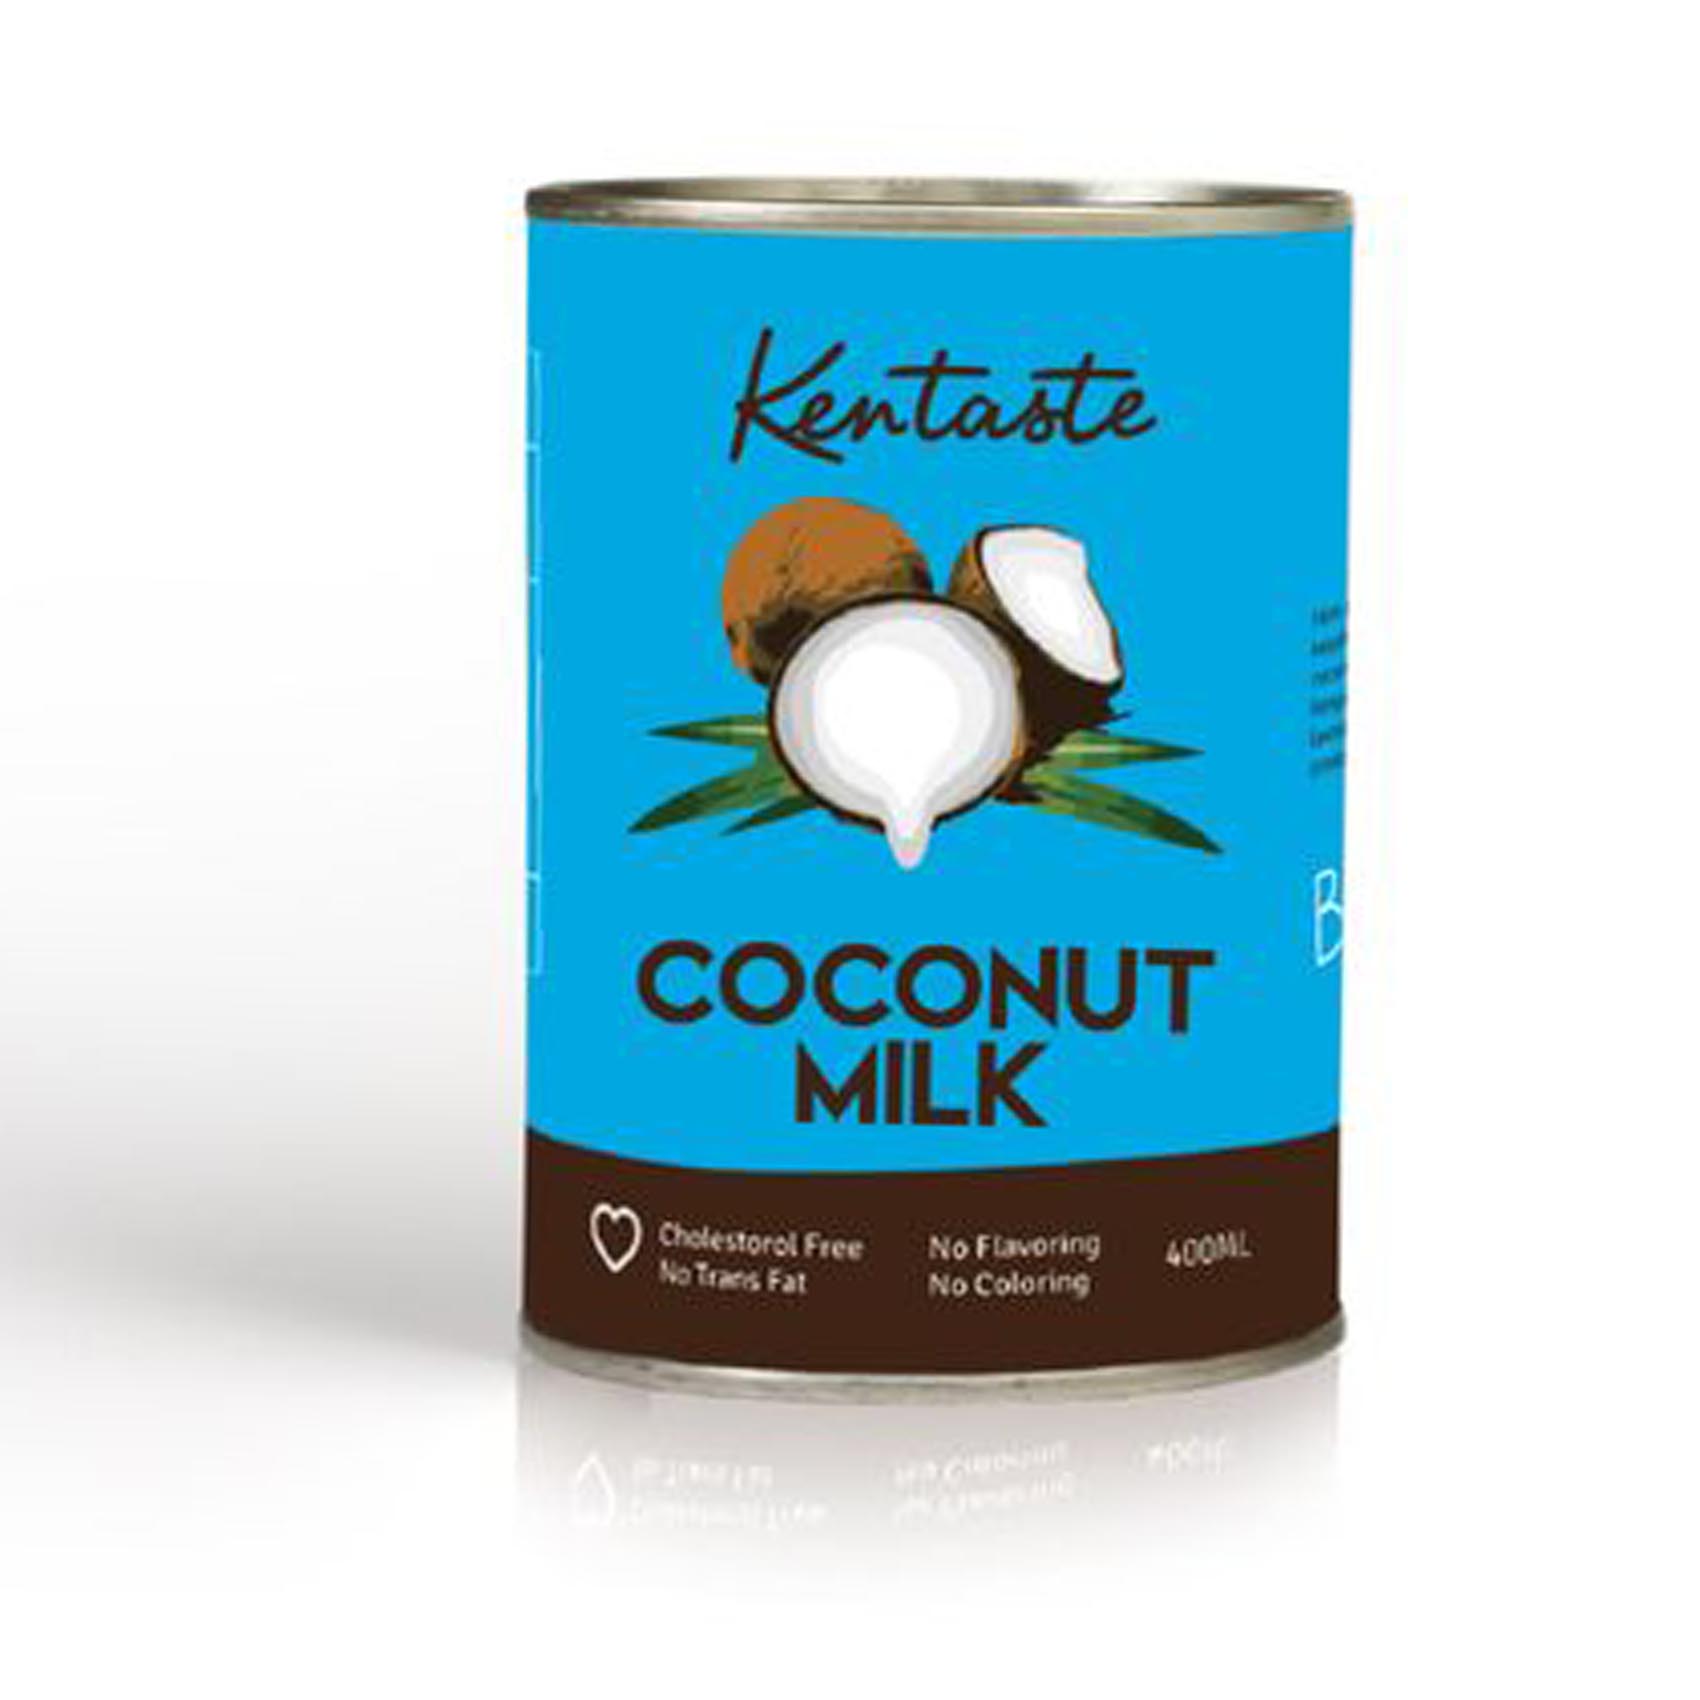 Kentaste Coconut Milk 400ml